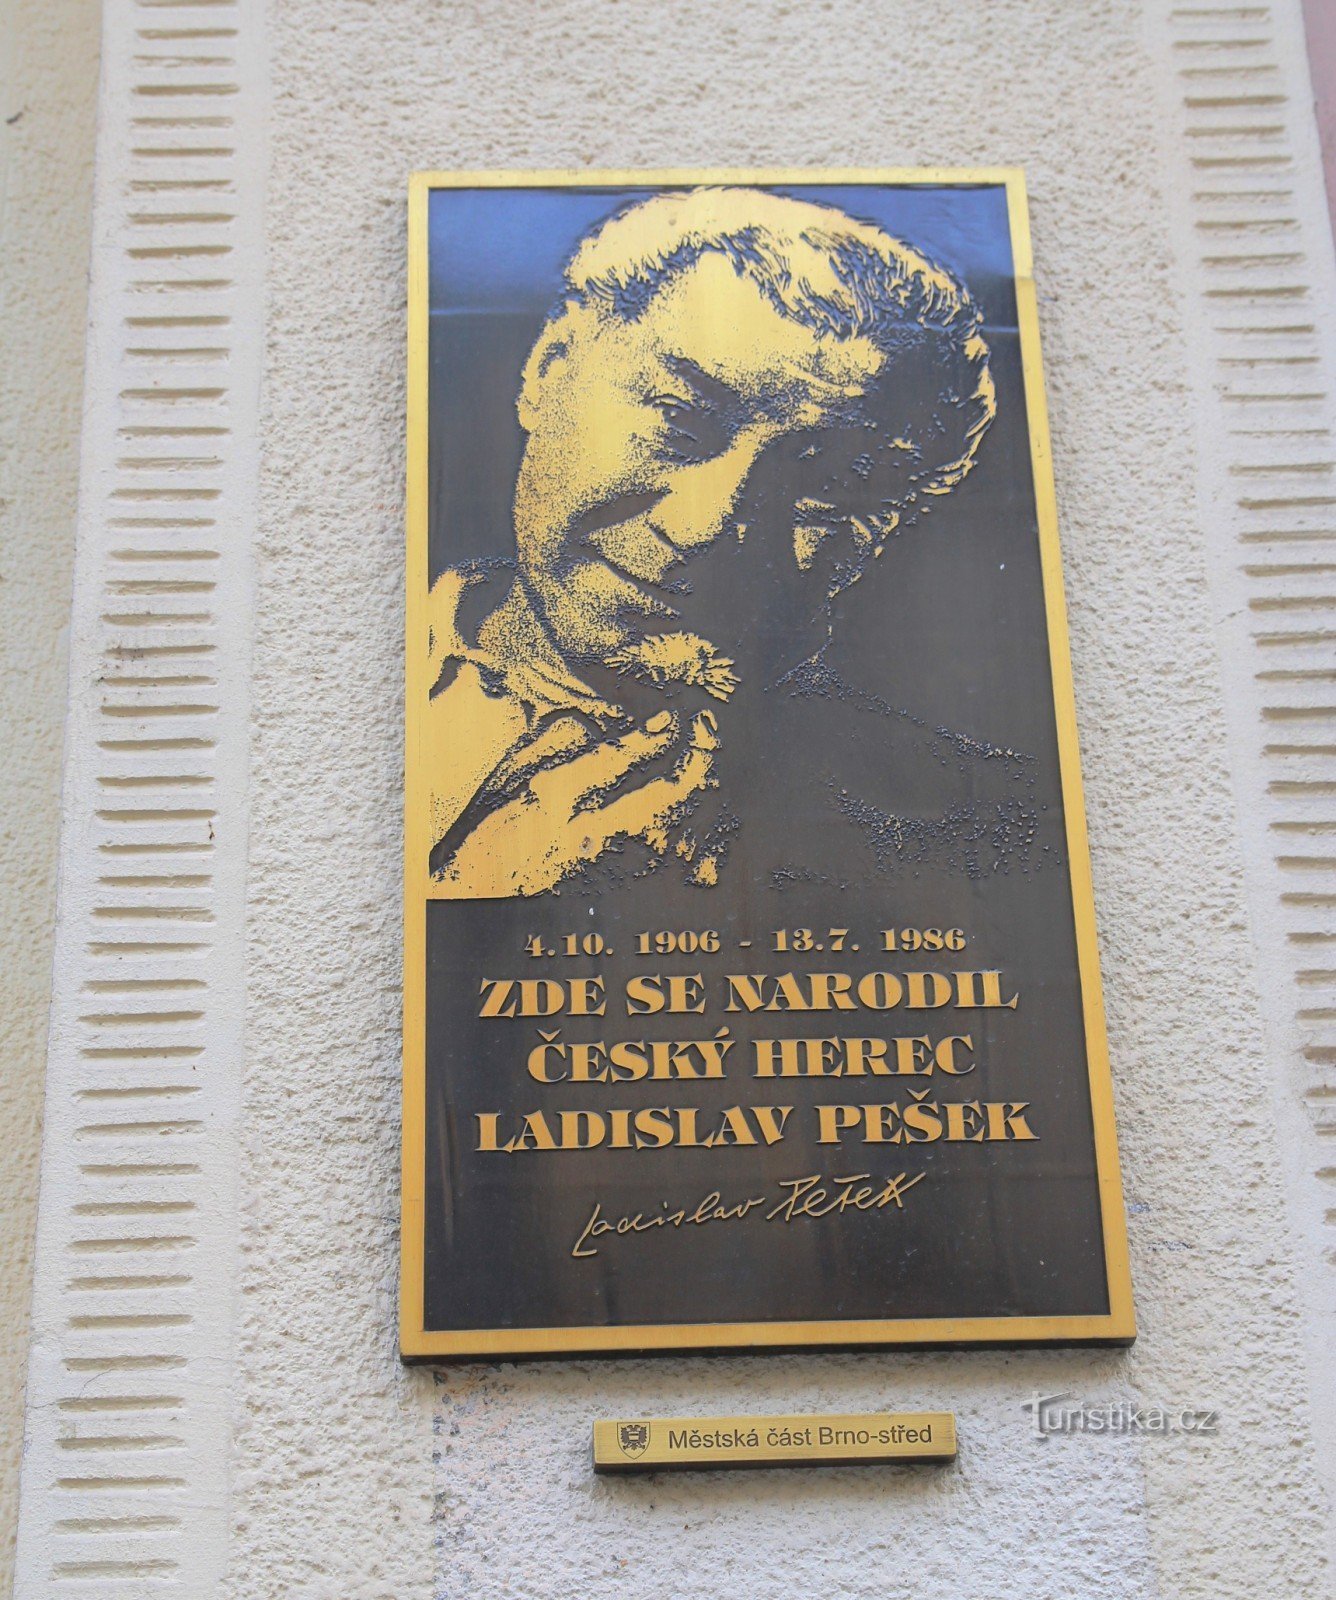 Memorial plaque of Ladislav Pešek